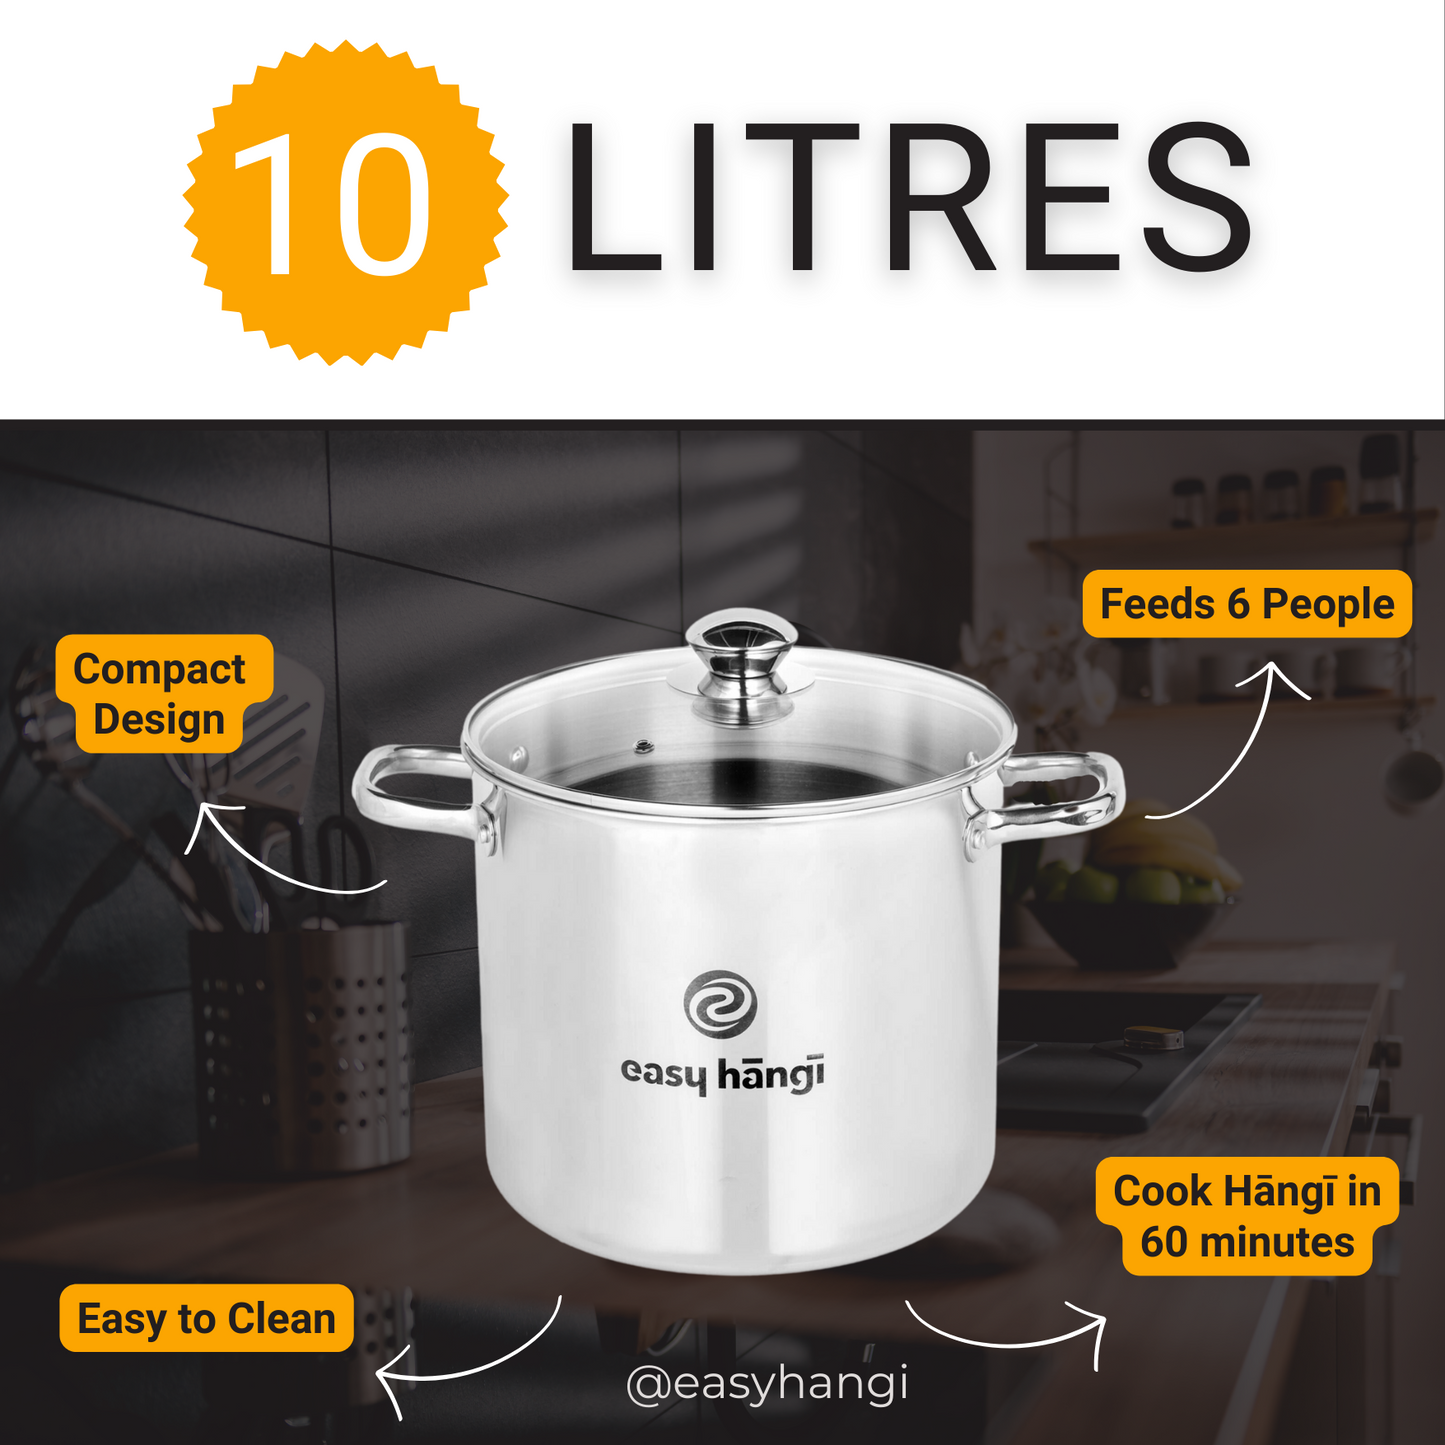 Triply 10 litre Cooking Kit ⭐️ Plus 2 FREE Flavour packs